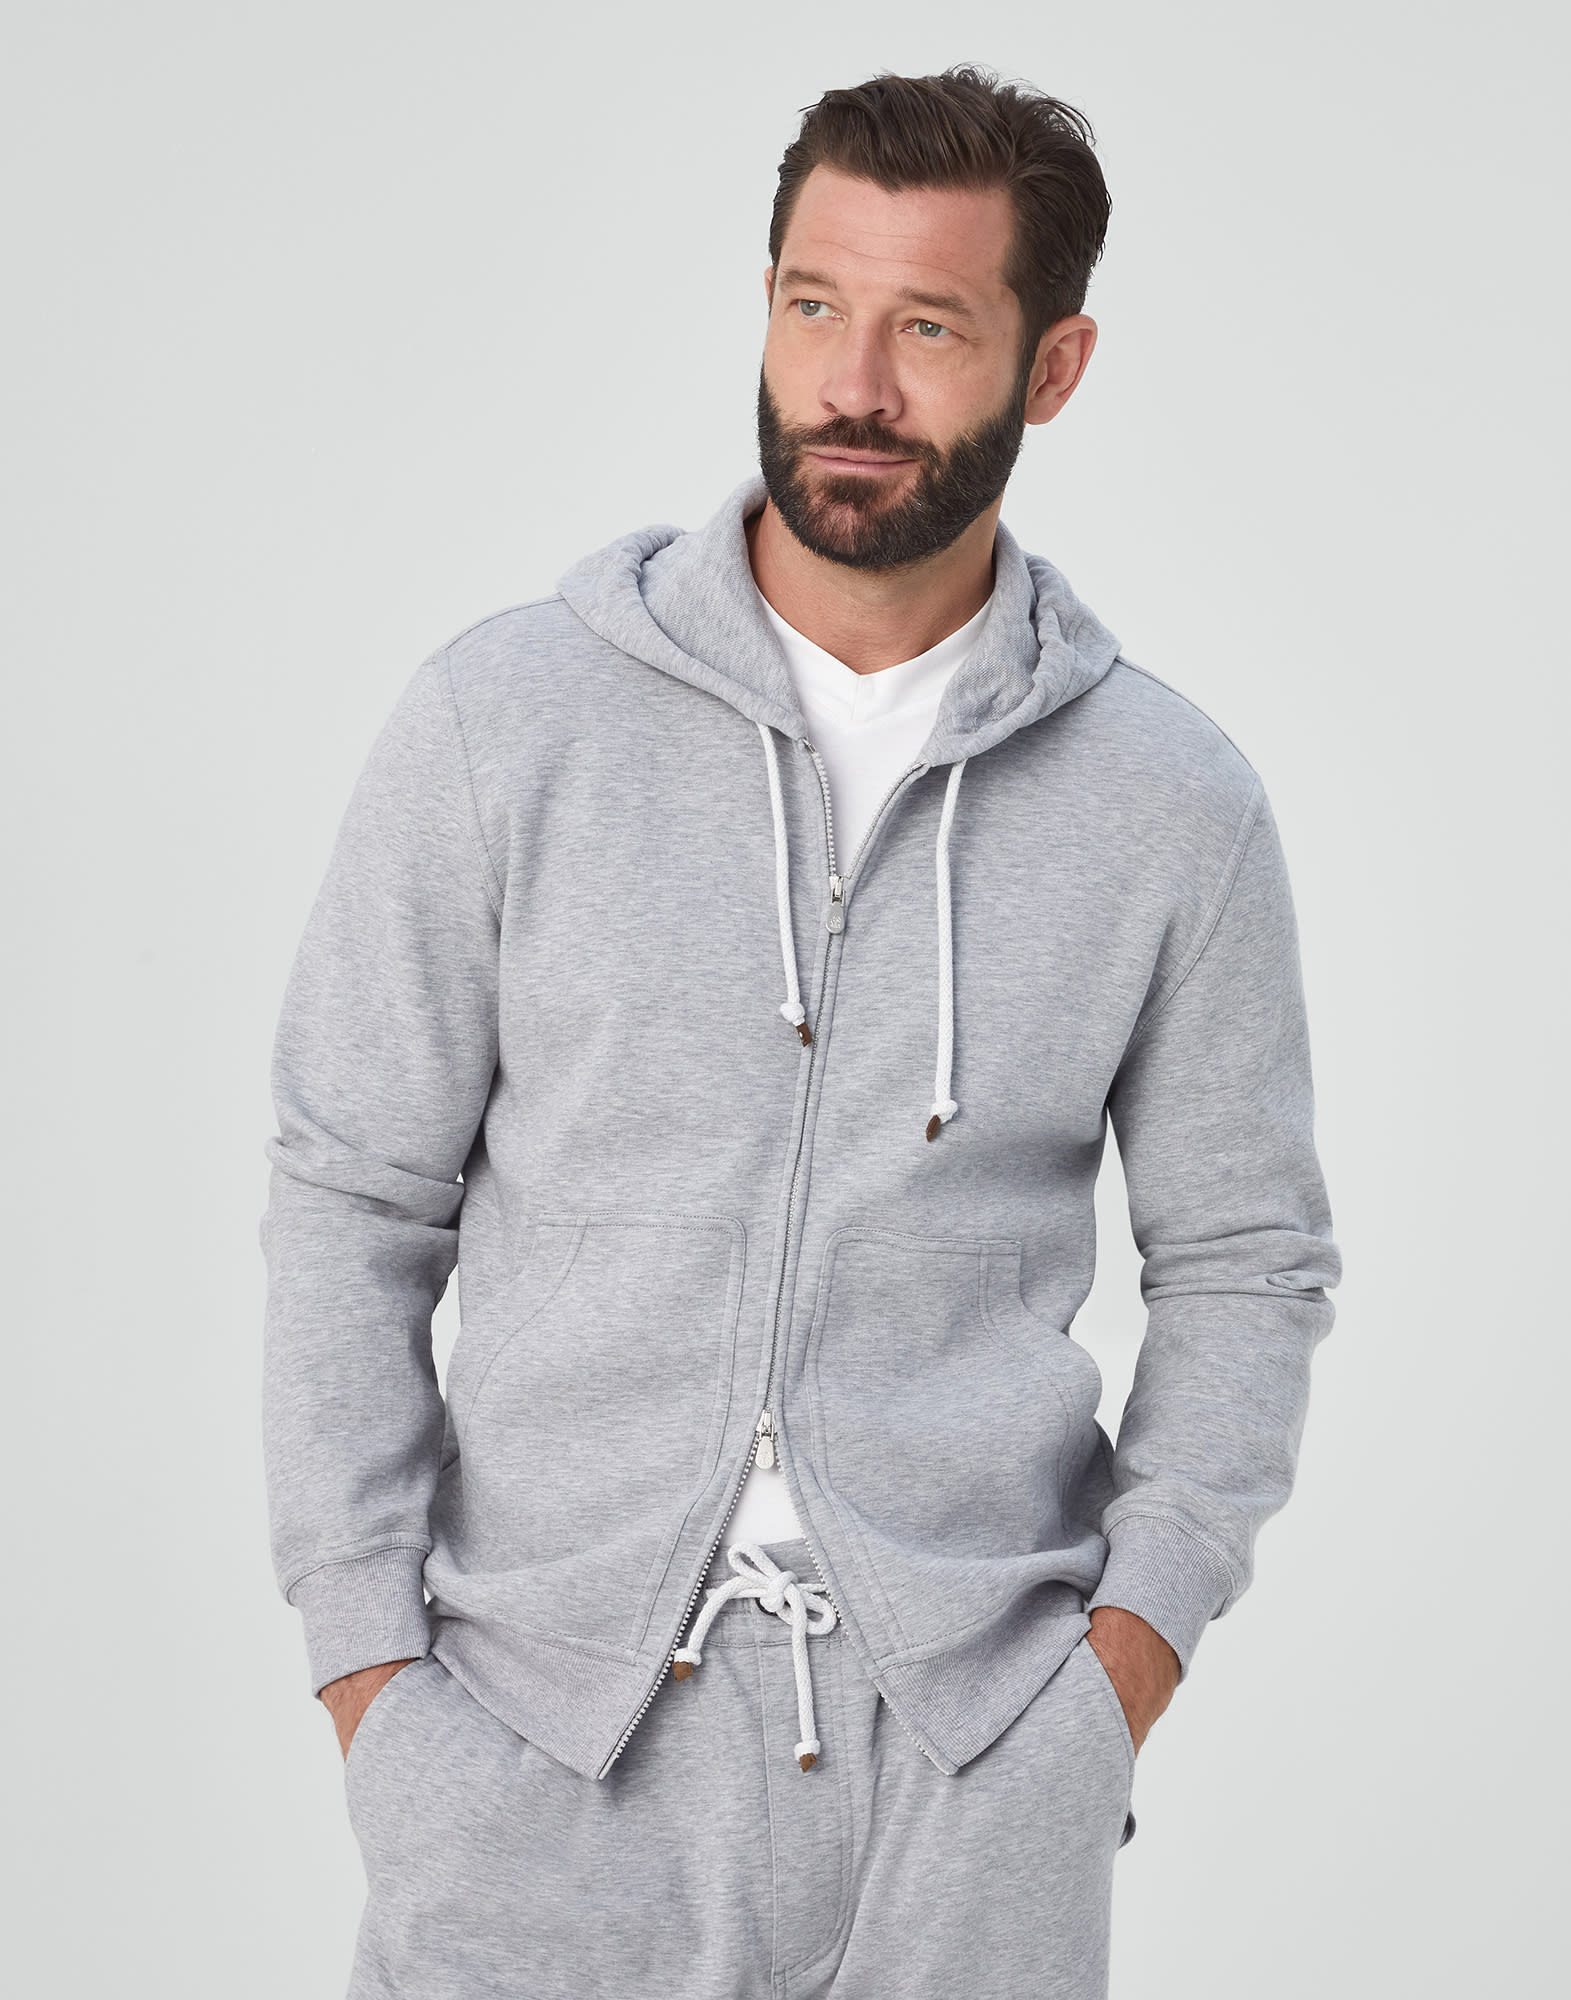 Sweatshirt with hood Grey Man -
                        Brunello Cucinelli
                    